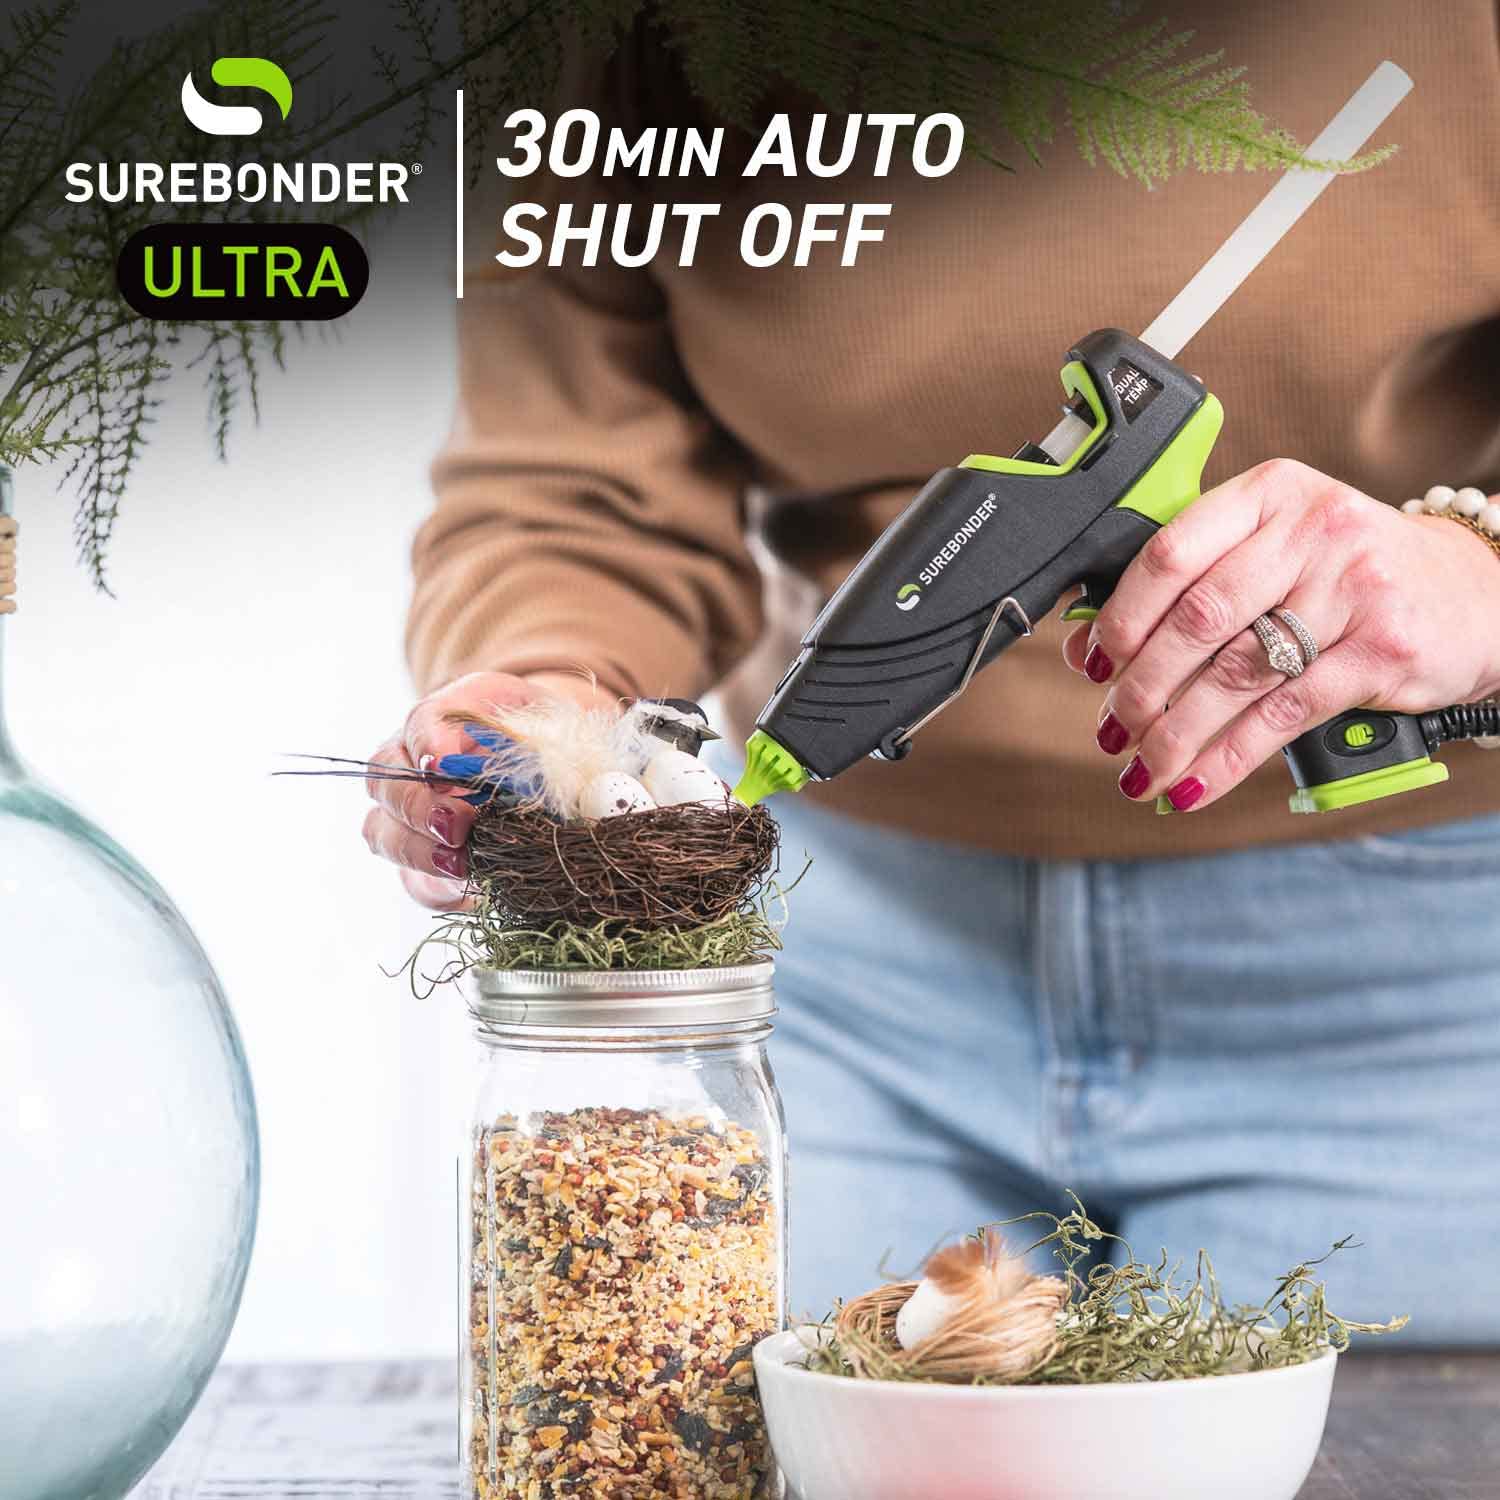 Surebonder Auto Shut Off Hot Glue Gun, Dual Temperature, 1.5X Power of Full Size Glue Guns, Easy-Adjust Temp for Multiple Projects (Ultra Series DT-360F)